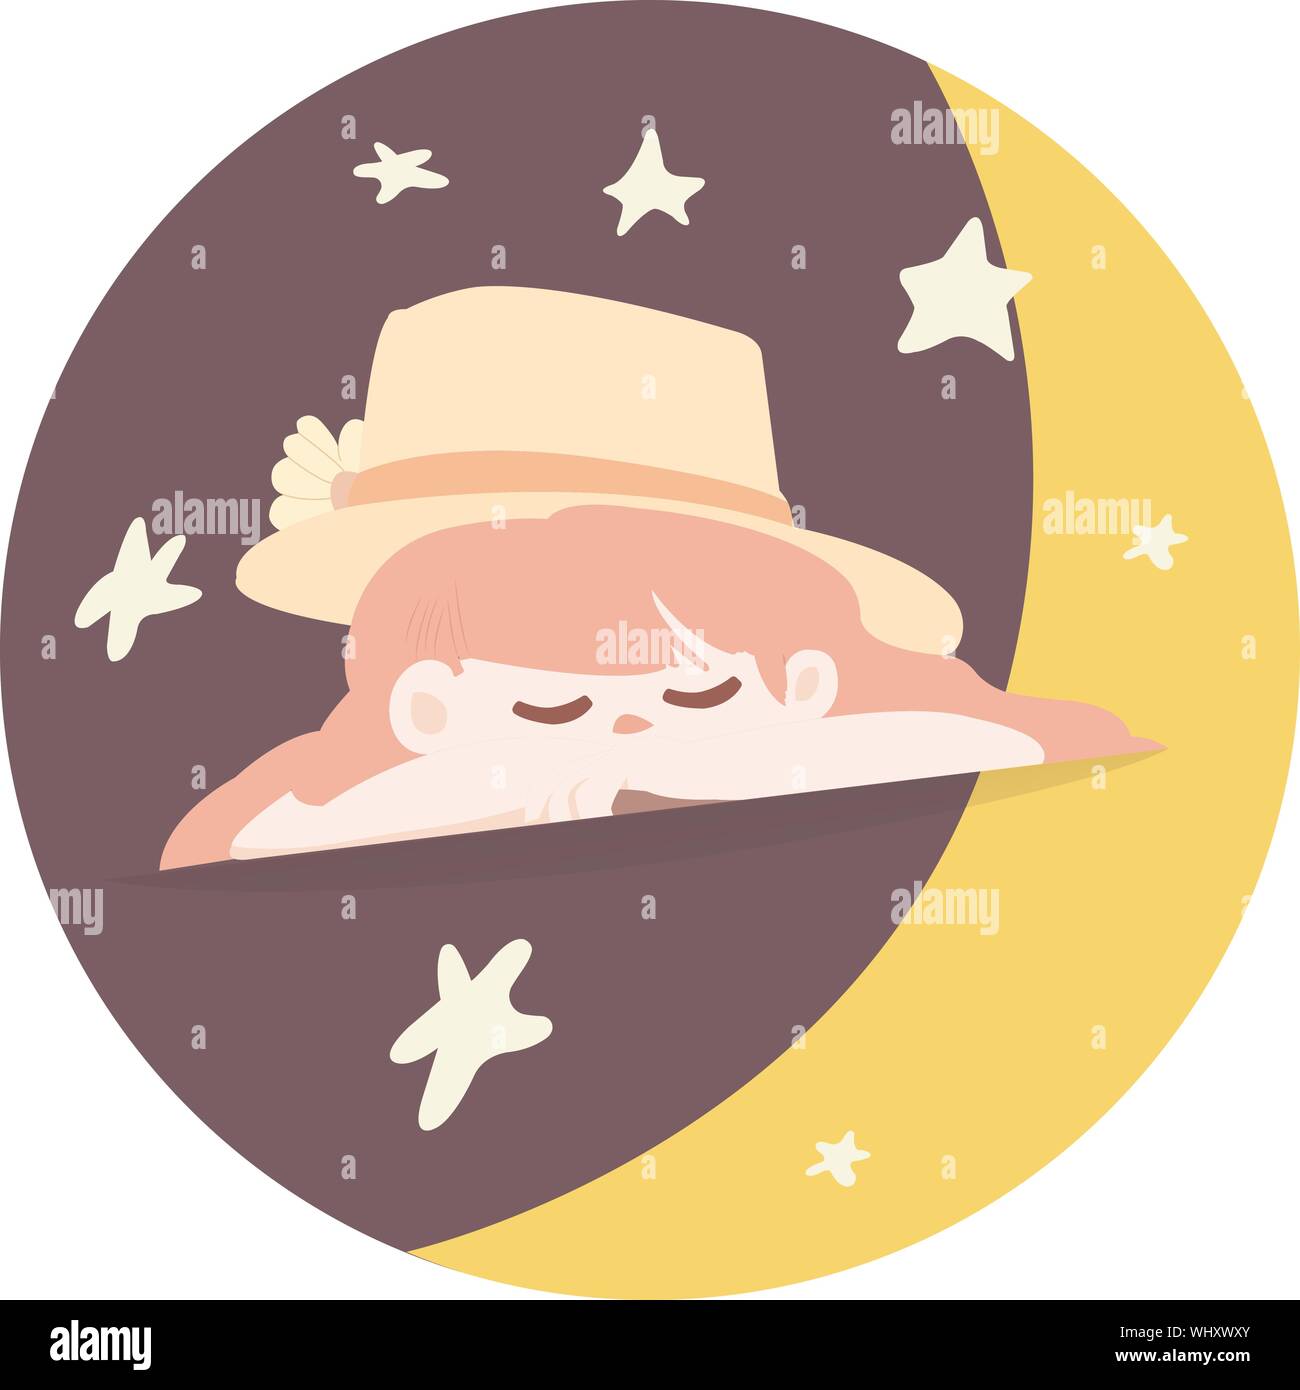 Cute girl cartoon sleep in circle with moon and star vector illustration.Illustration kawaii girl cartoon logo Stock Vector